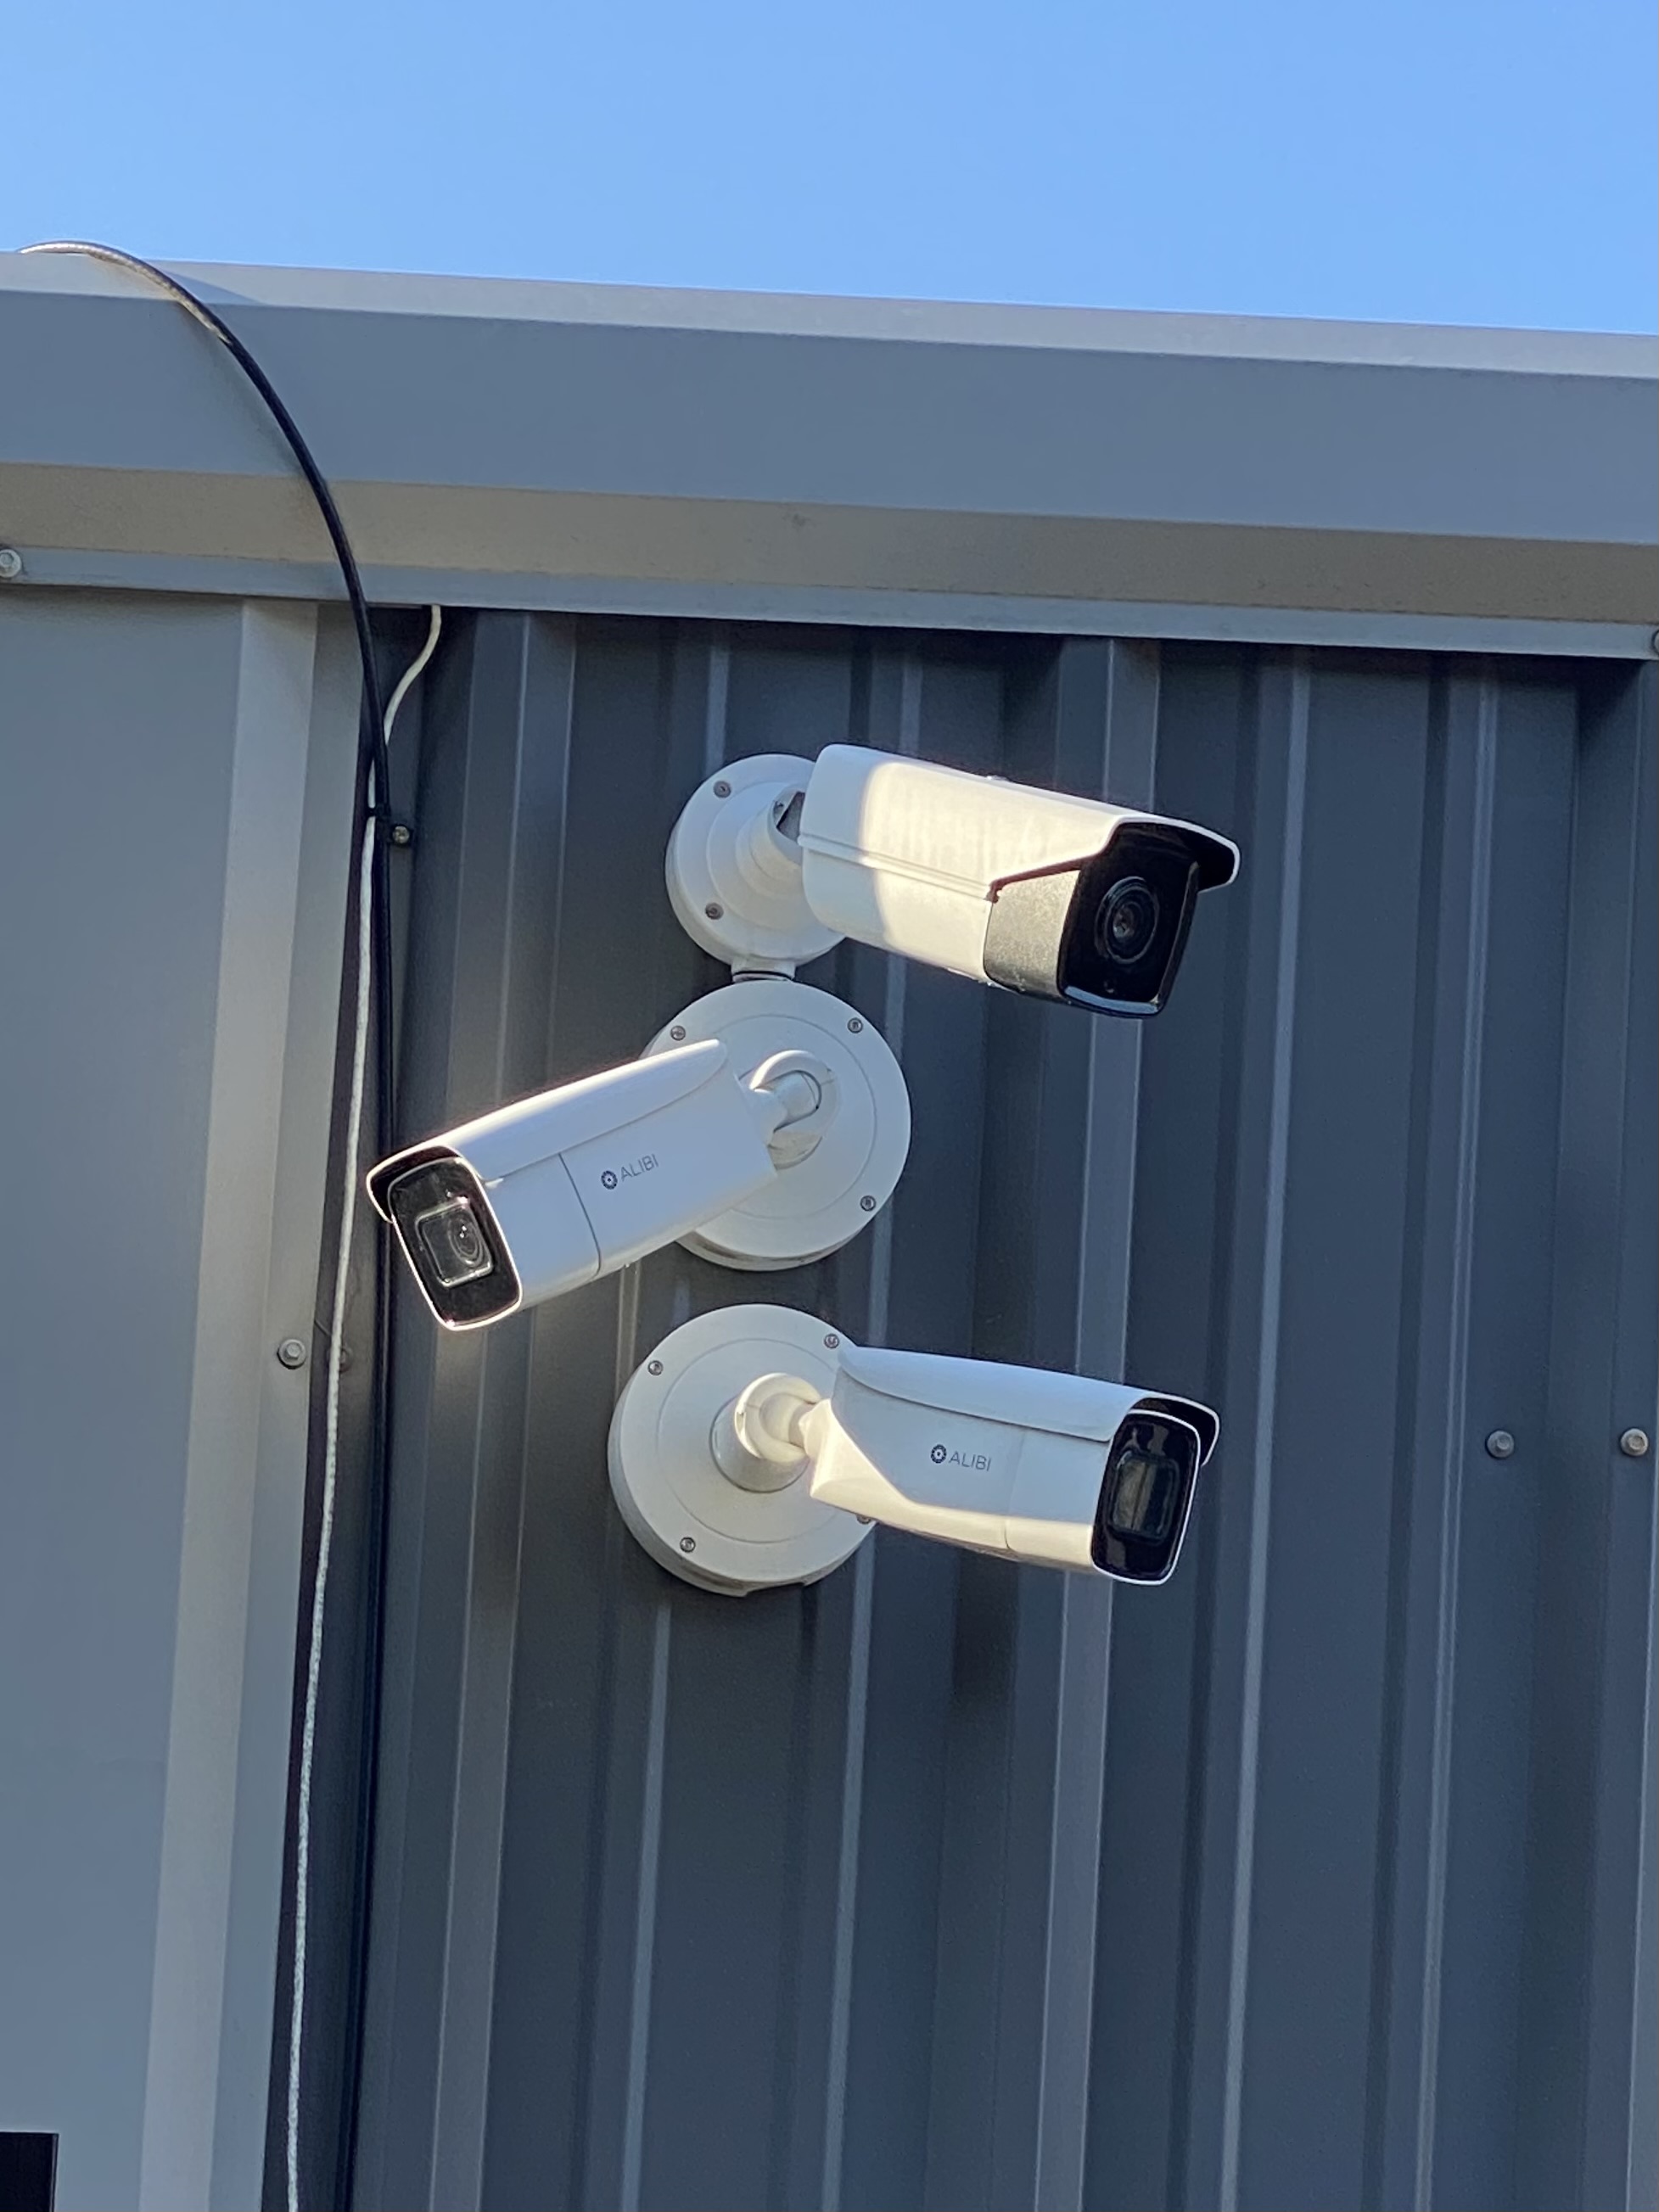 Facility Surveillance